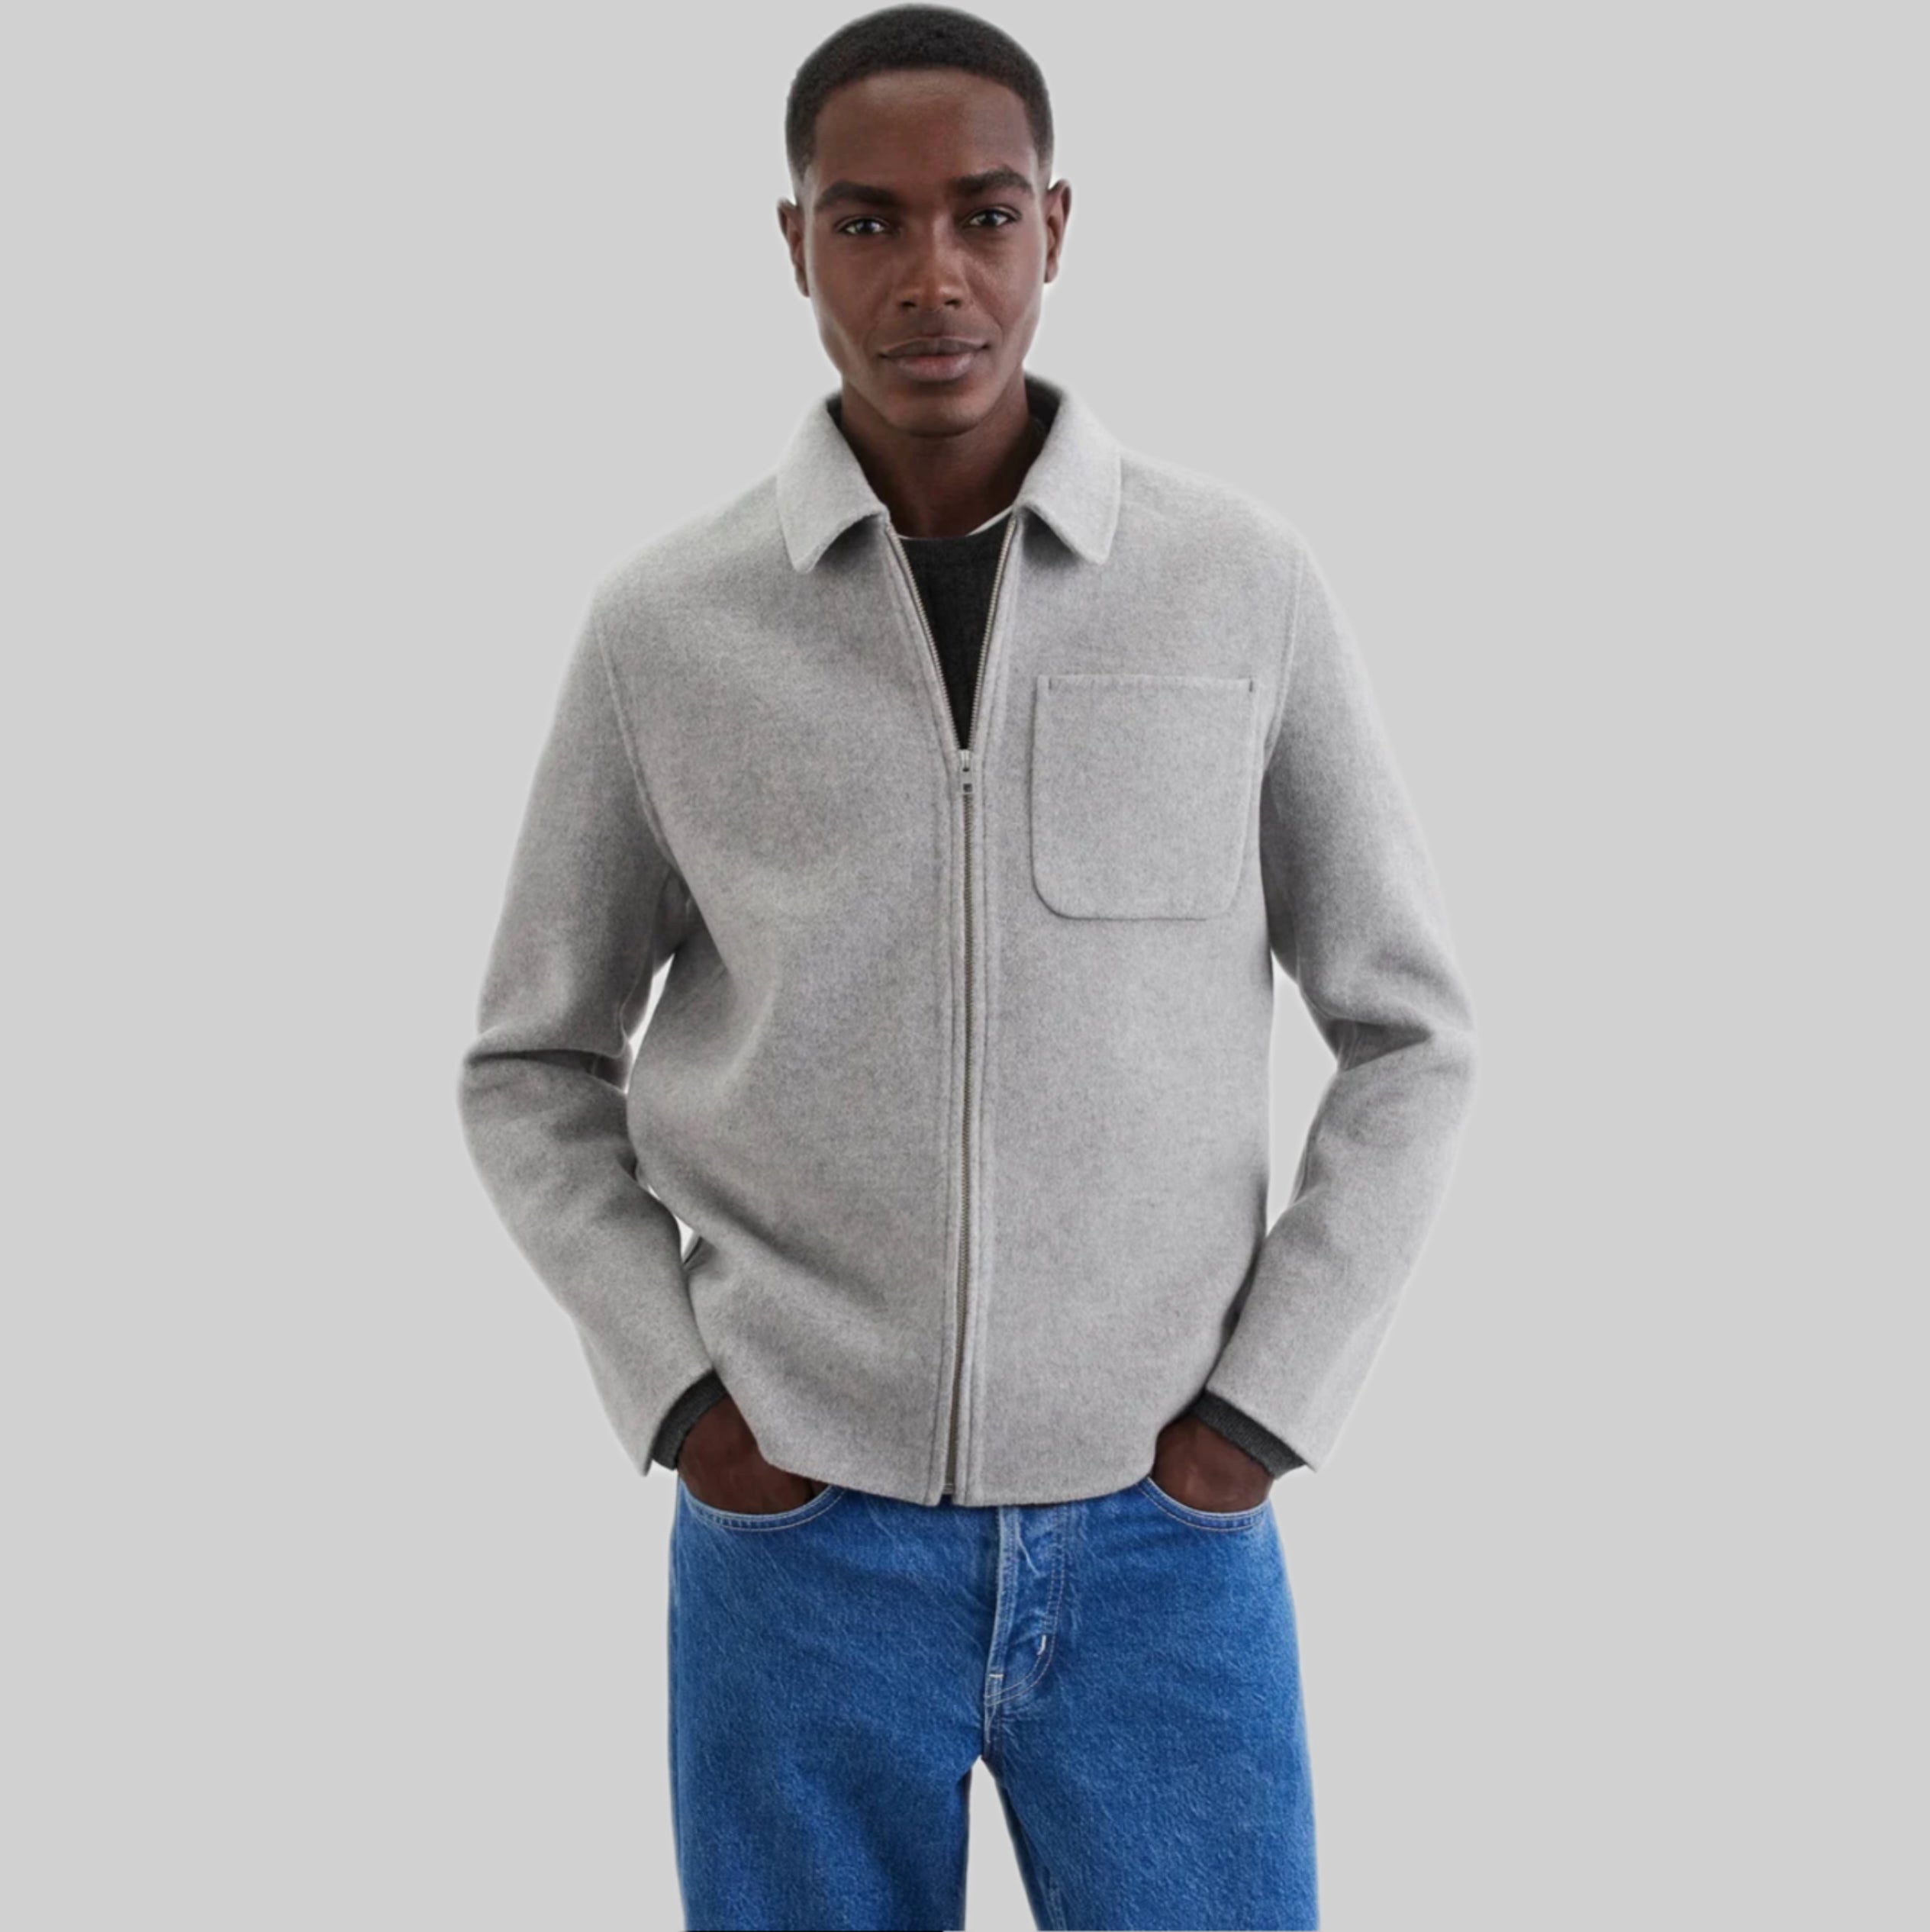 Soft Goat jacket, gray, men, frontside, model